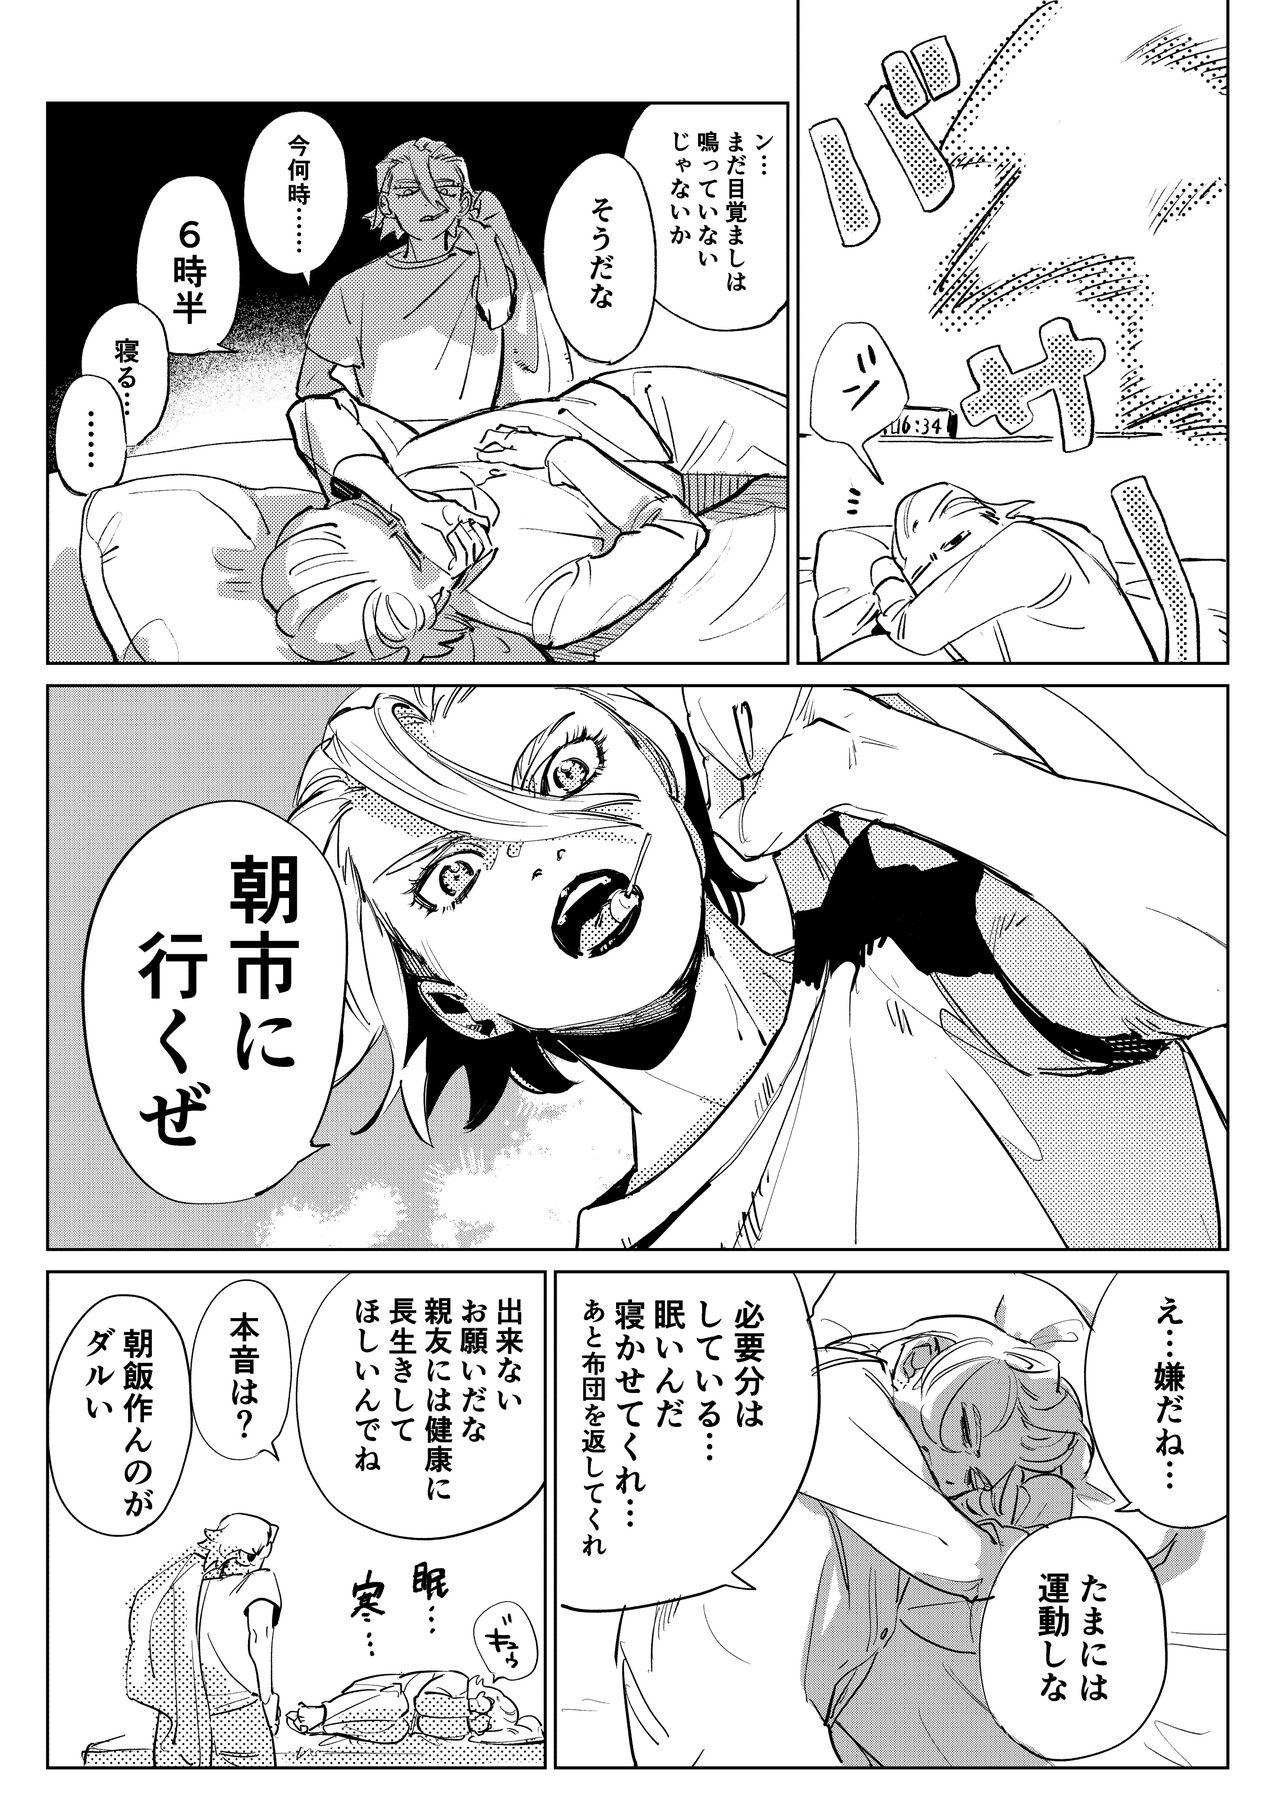 2 Ri Manga 5